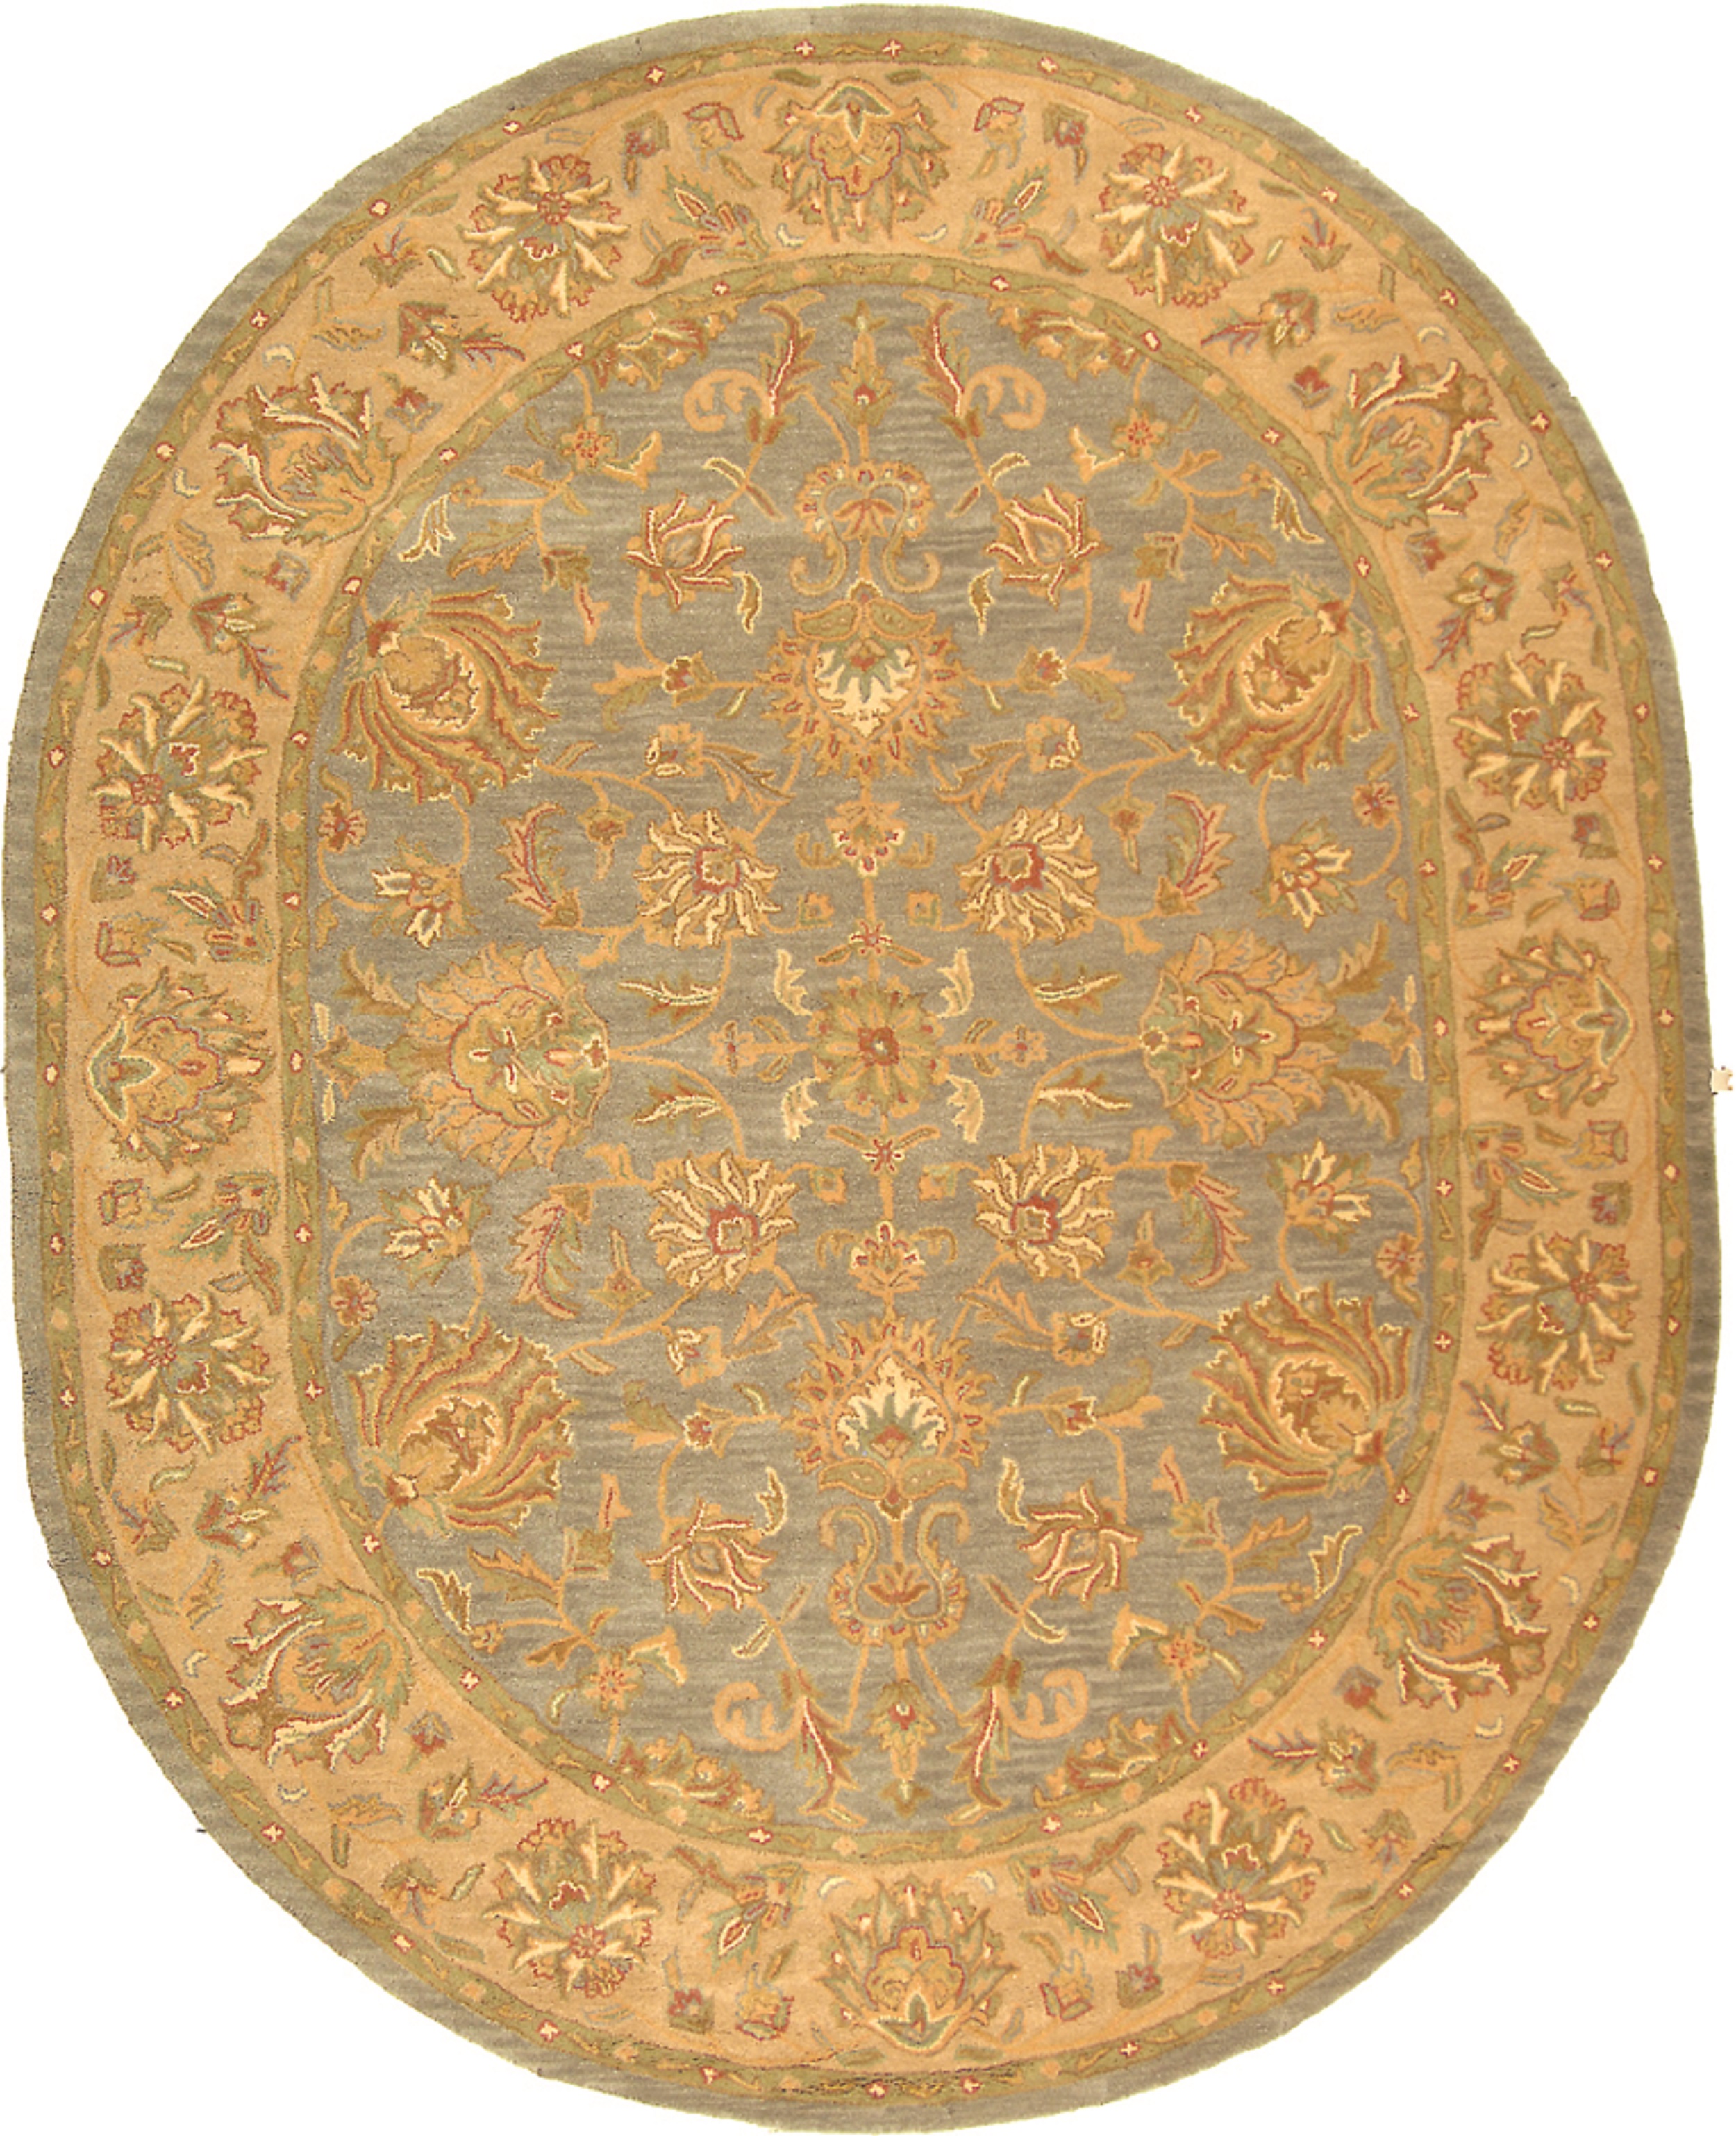 SAFAVIEH Heritage Regis Traditional Wool Area Rug, Blue/Beige, 4'6" x 6'6" Oval - image 1 of 4